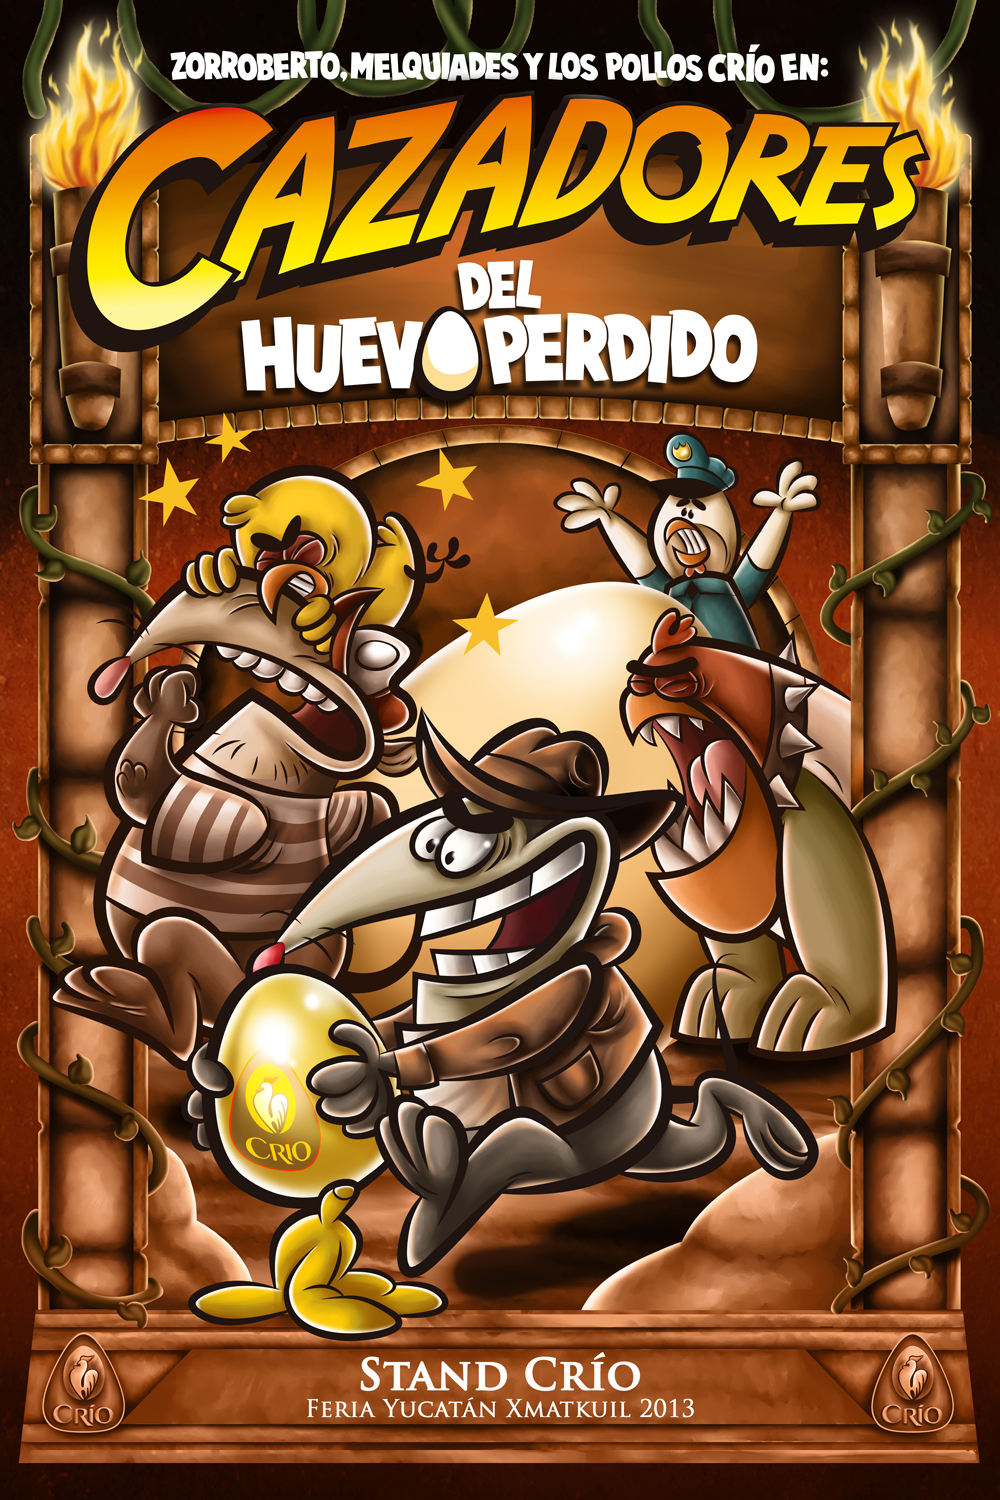 eggs FOX Fun funny Mexican cool matatena cartoon